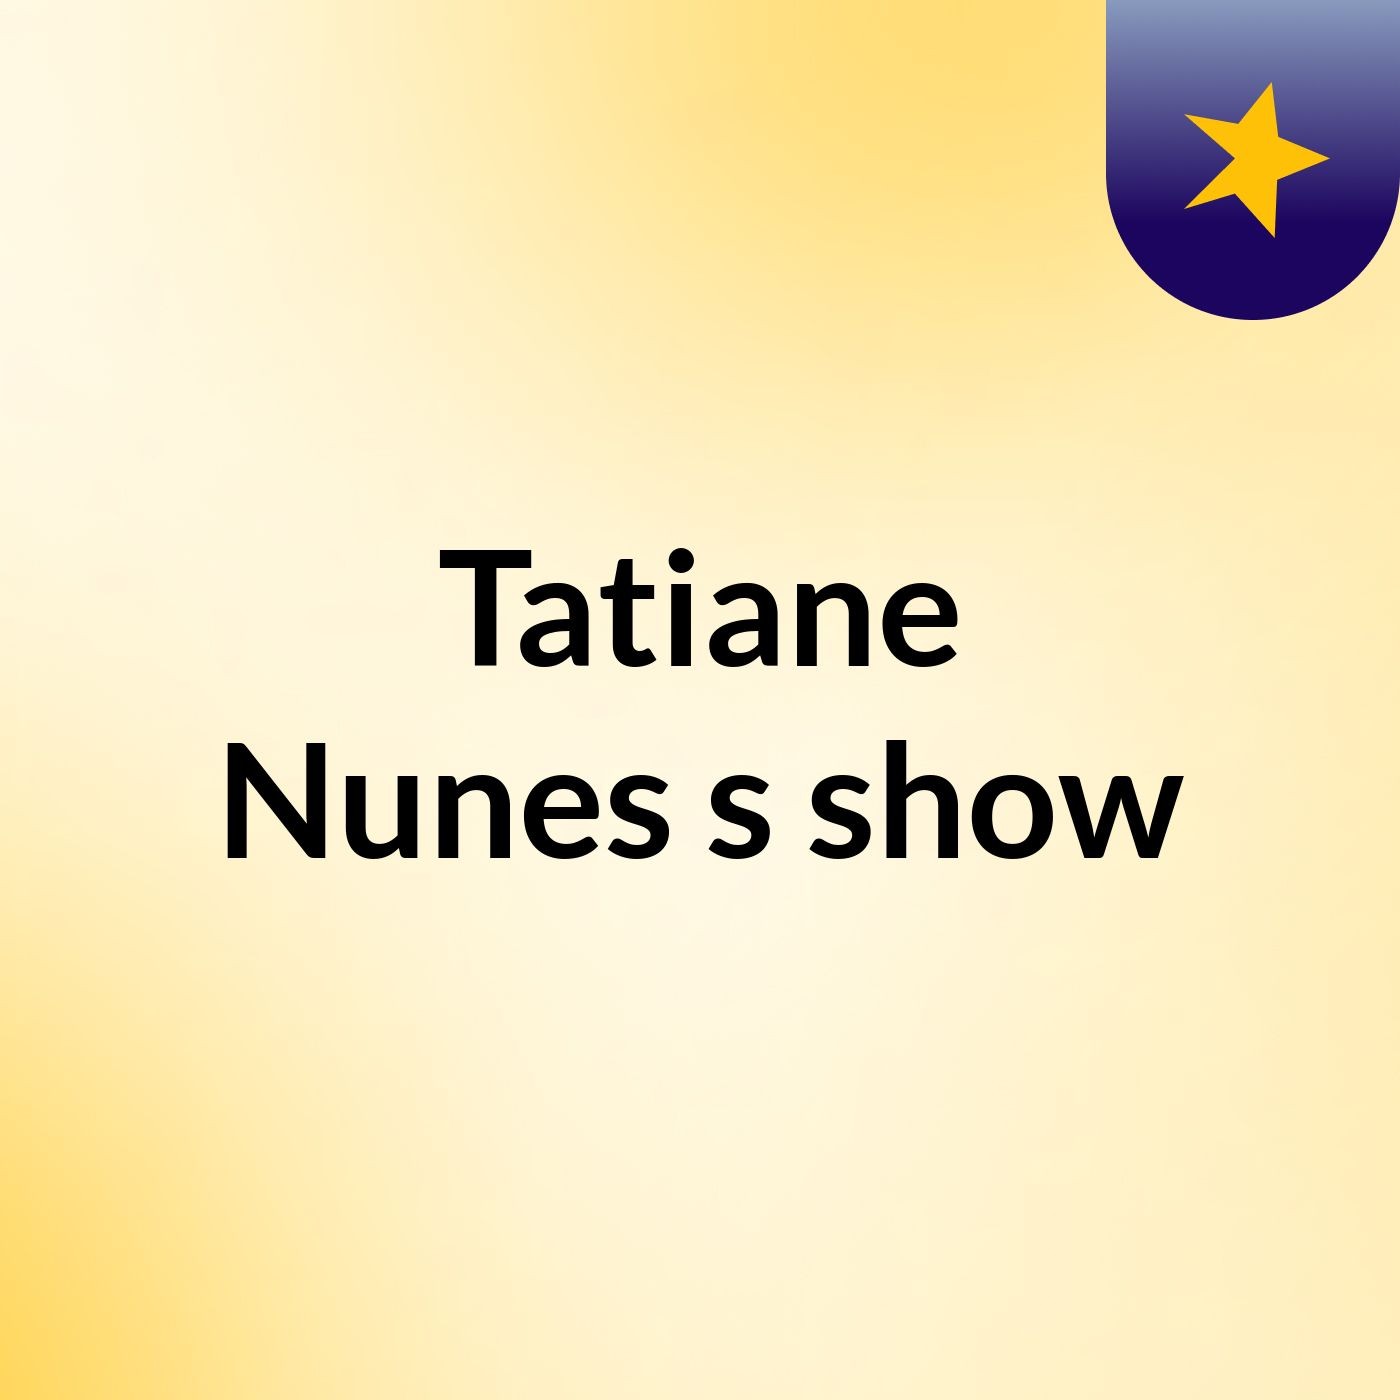 Tatiane Nunes's show